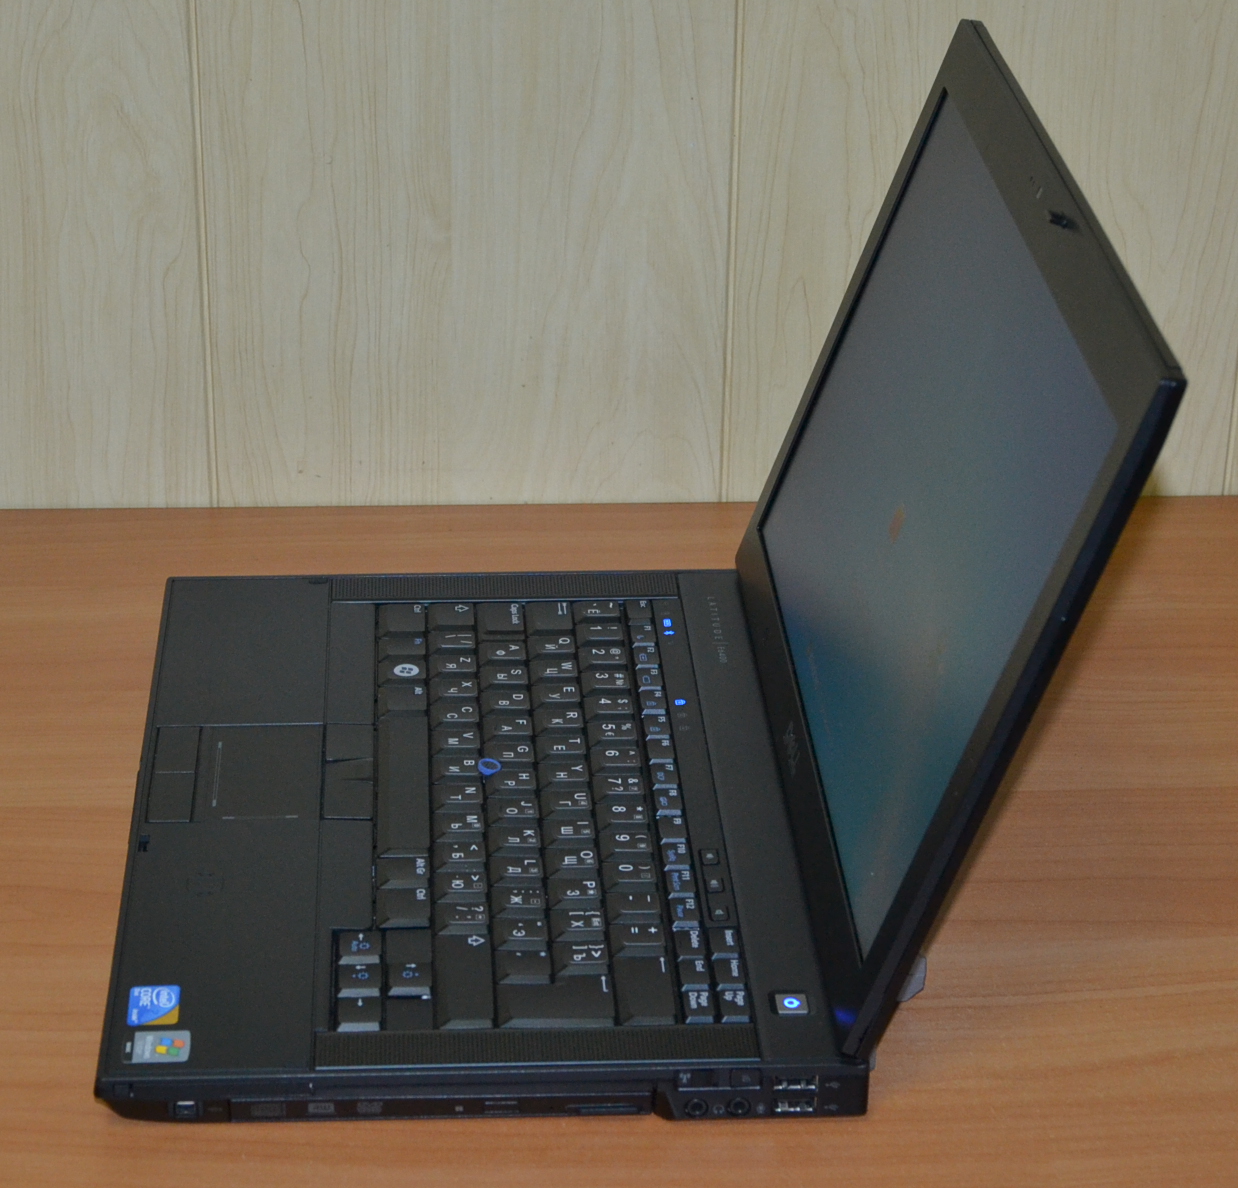 Dell E6400 — купить б/у ноутбук за 8,500 руб. с гарантией 6 месяцев